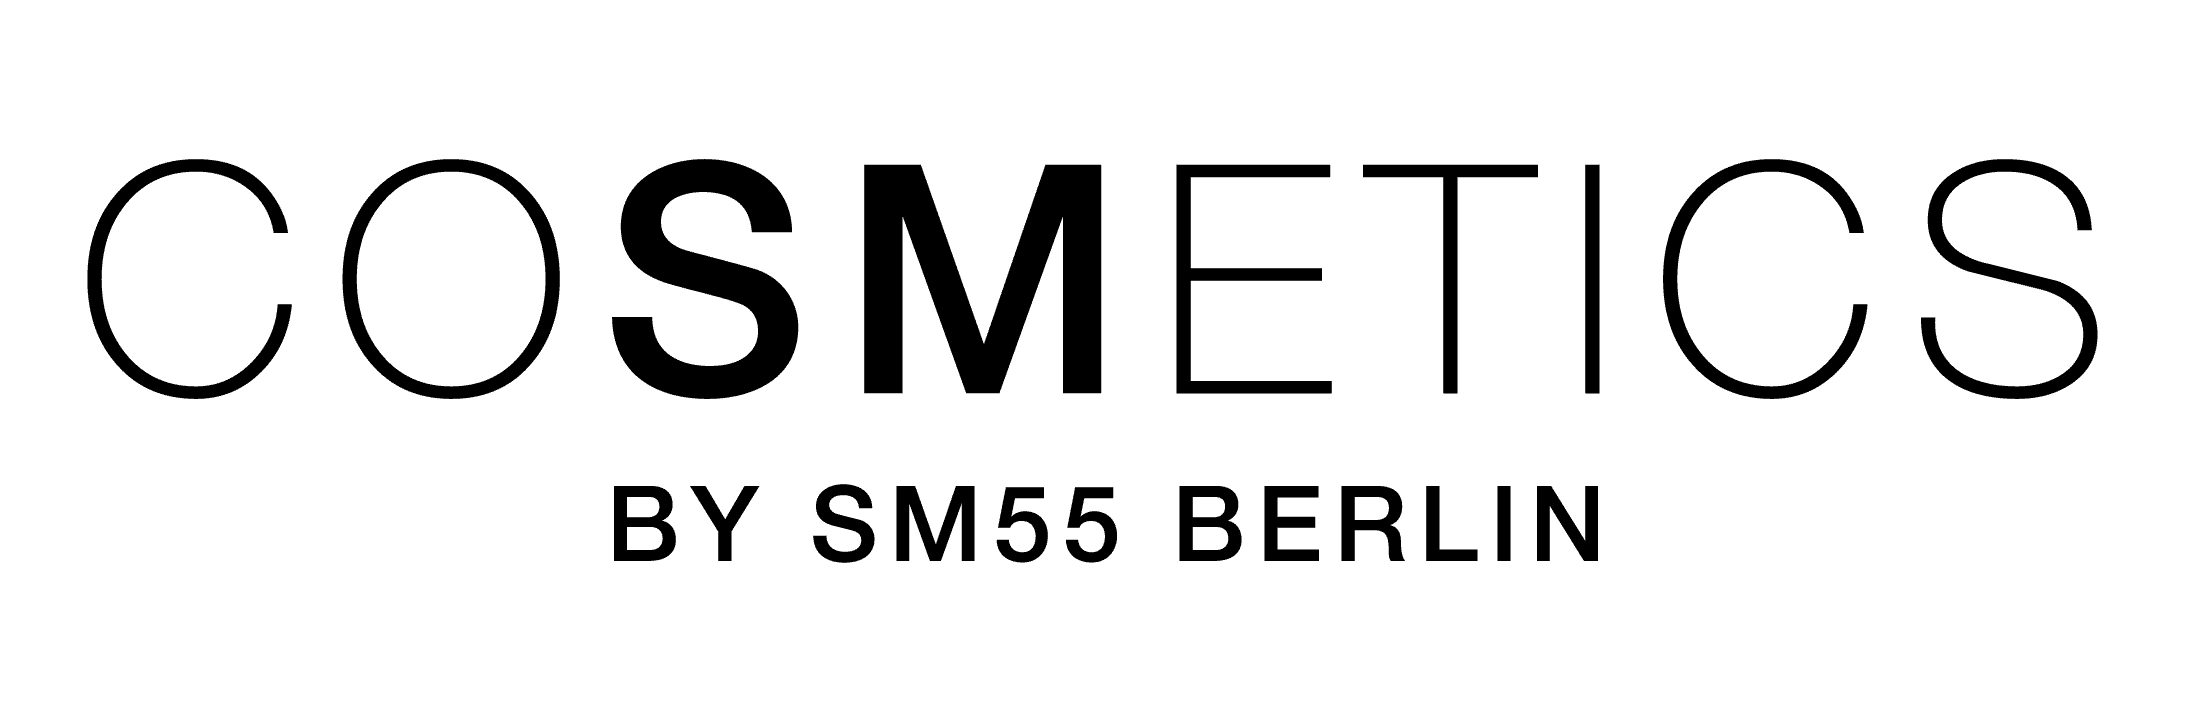 Cosmetics by SM55 Berlin